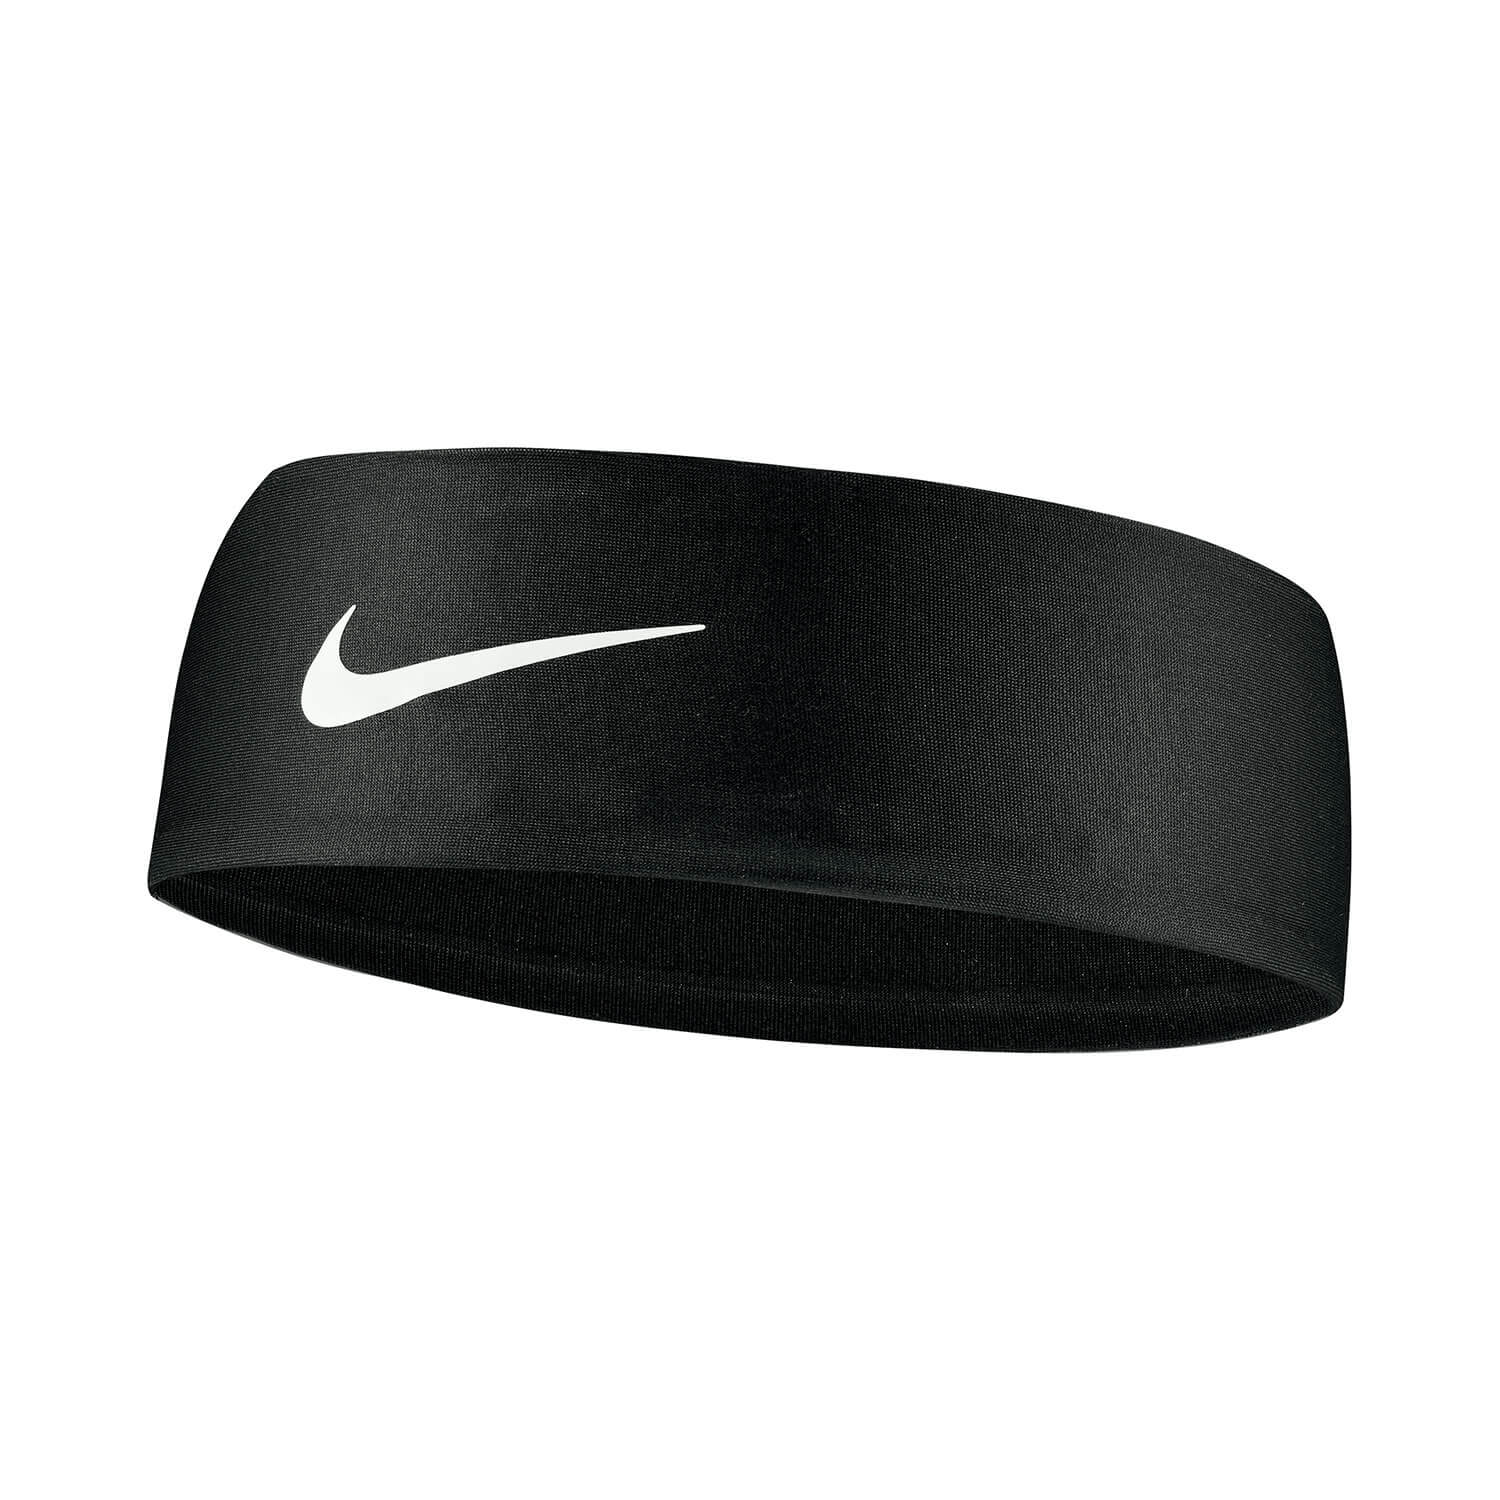 Nike Fury Headband 3.0 Black-White (Lateral - Front)